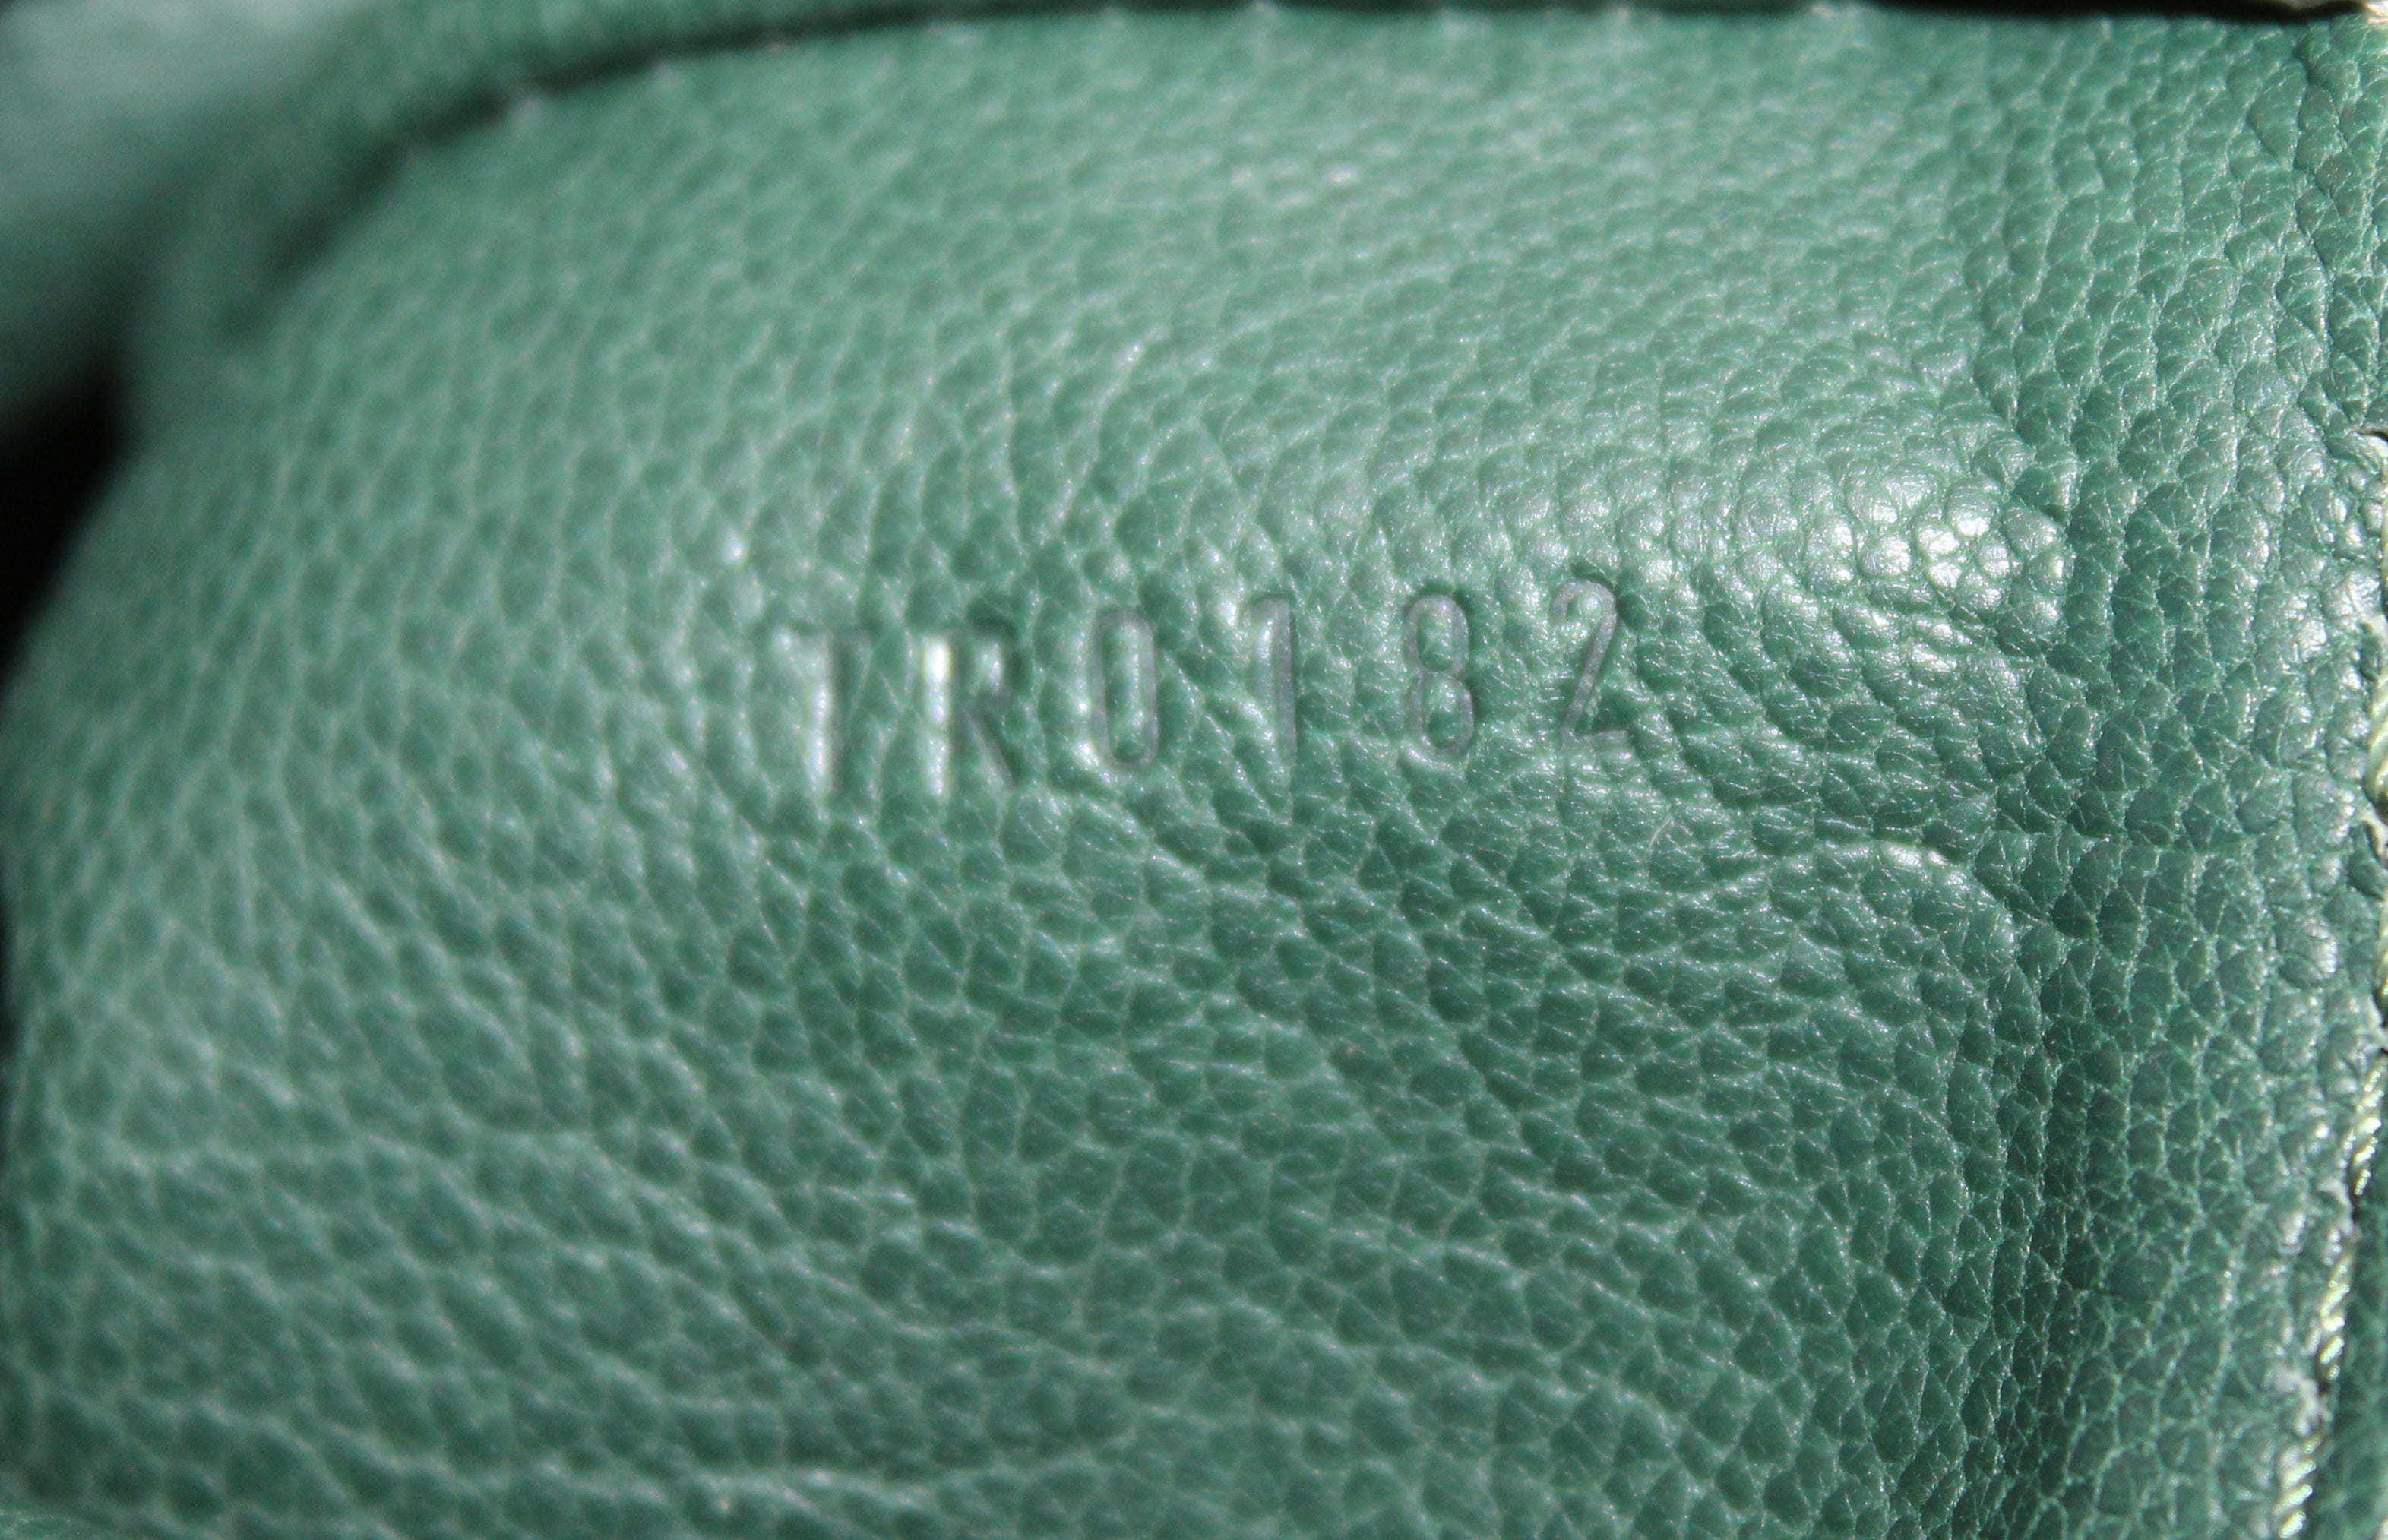 Authentic 2012 Limited Edition Louis Vuitton Green Monogram Sorbet